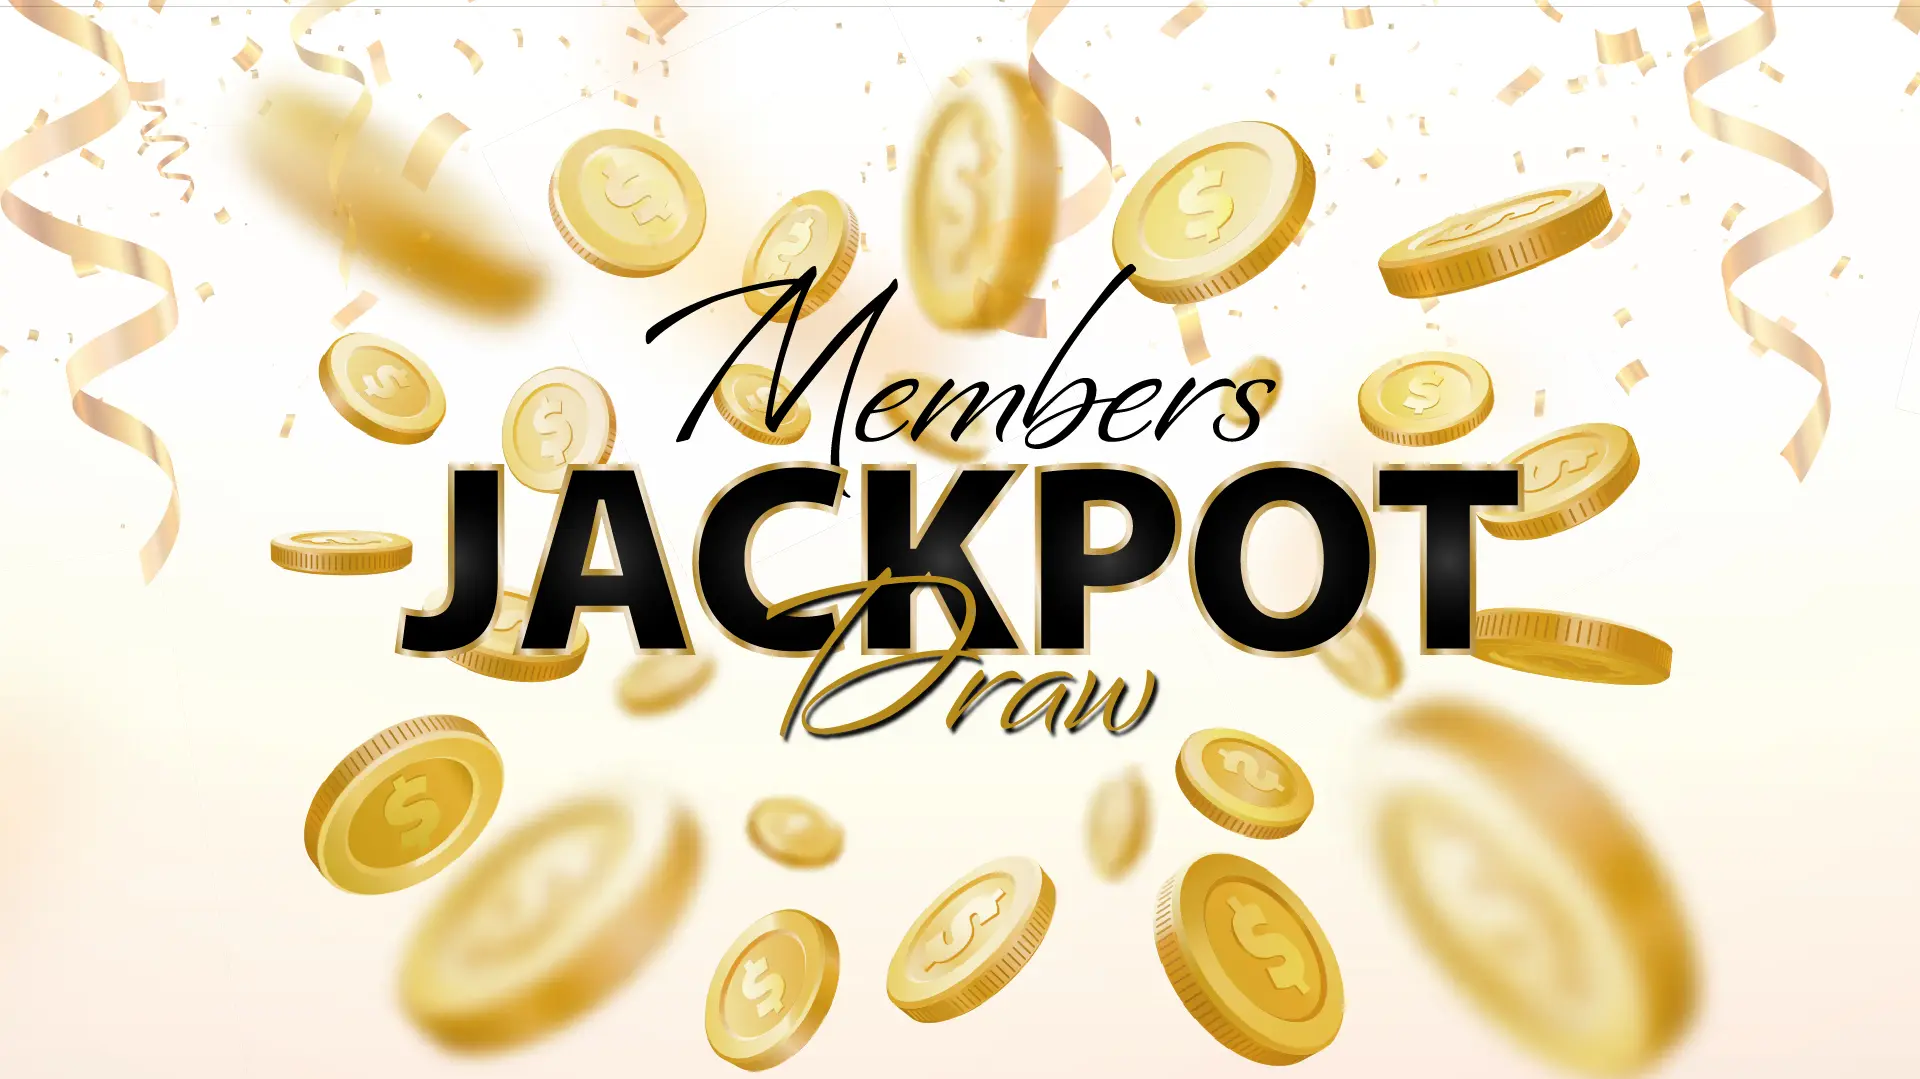 Members Jackpot Draws Wednesday SS&A